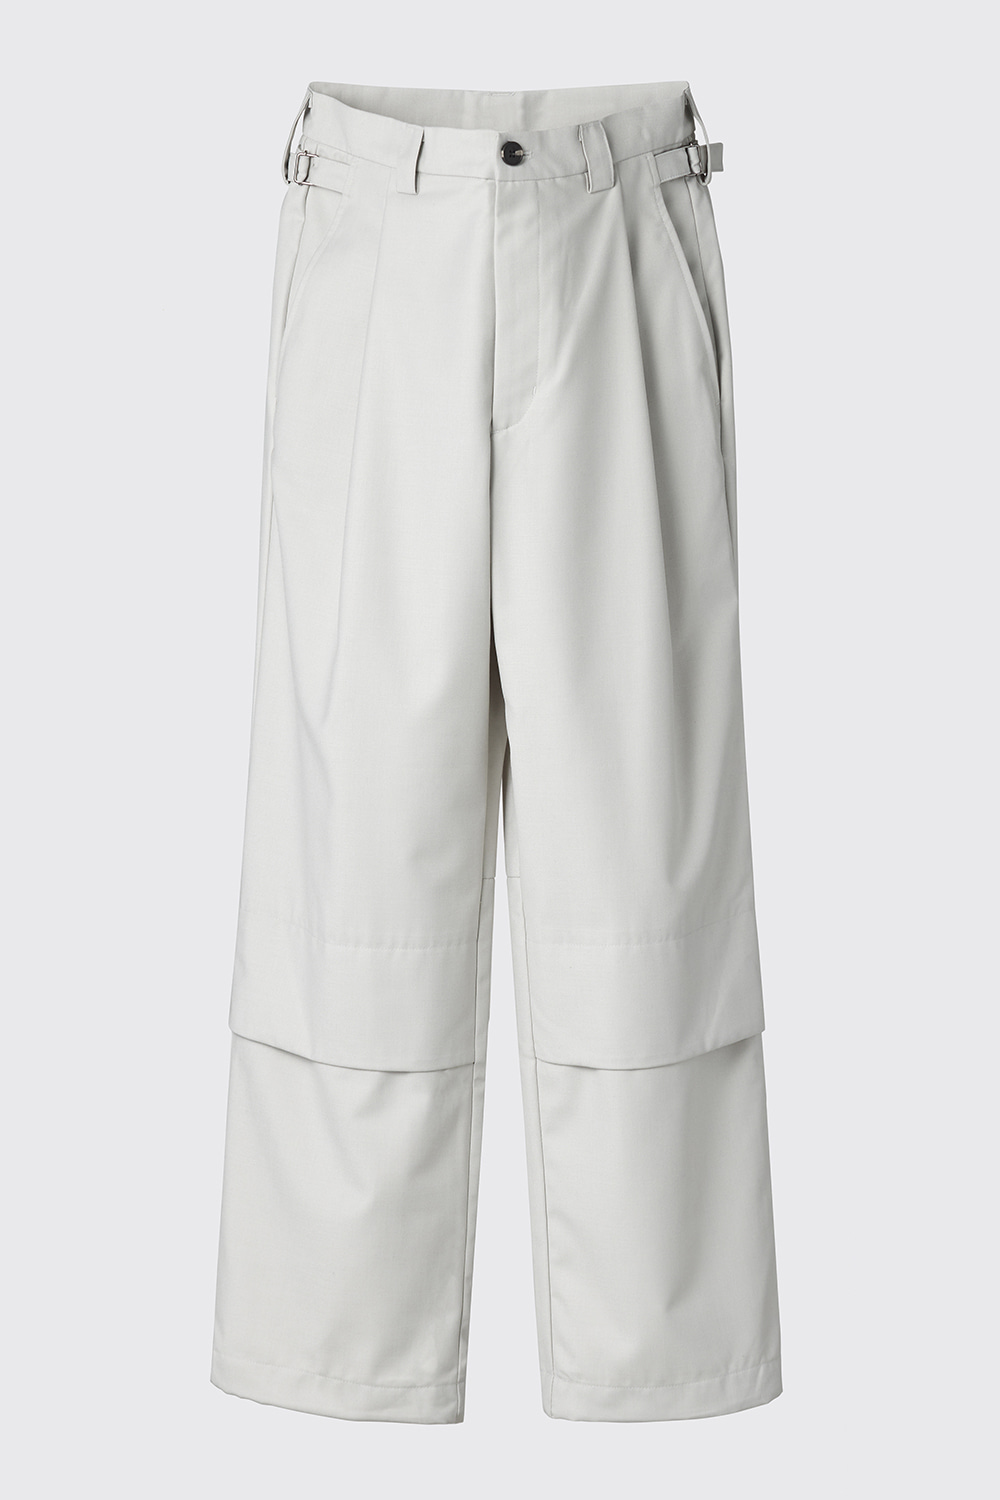 Layer Pants V2 Light Grey (Restock)